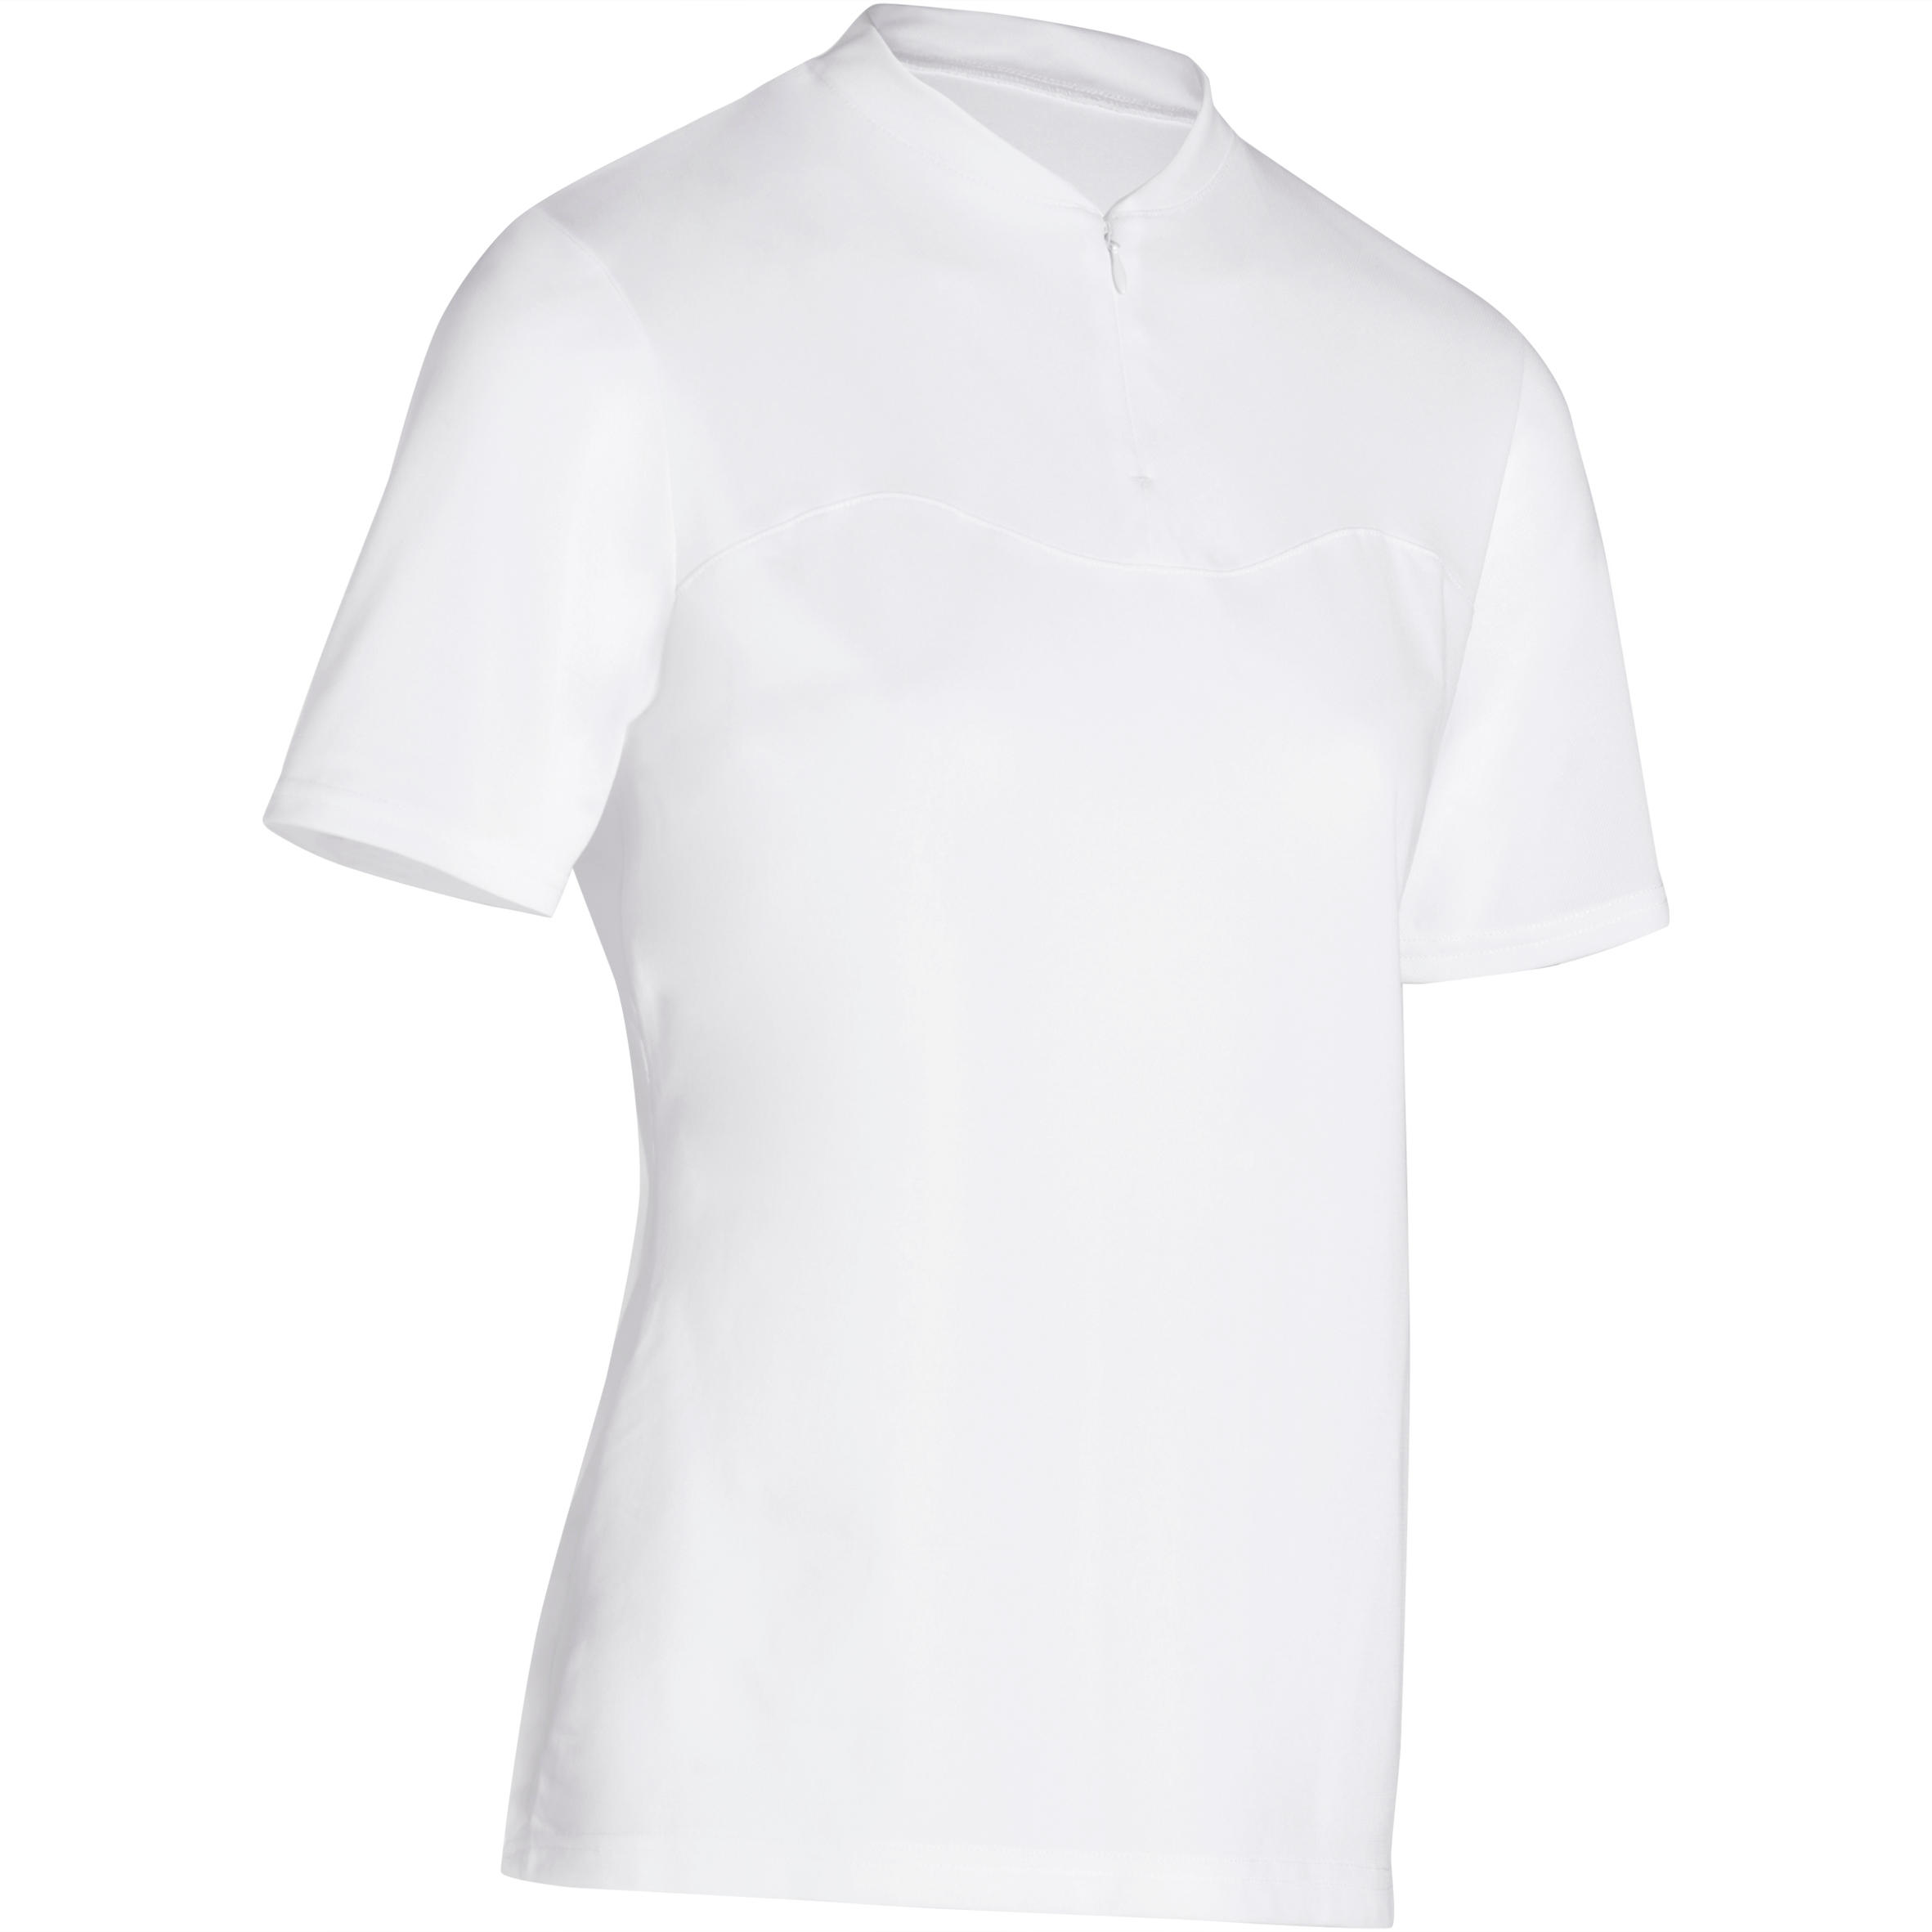 TRIBAN 300 Women's Short Sleeve Cycling Jersey - White